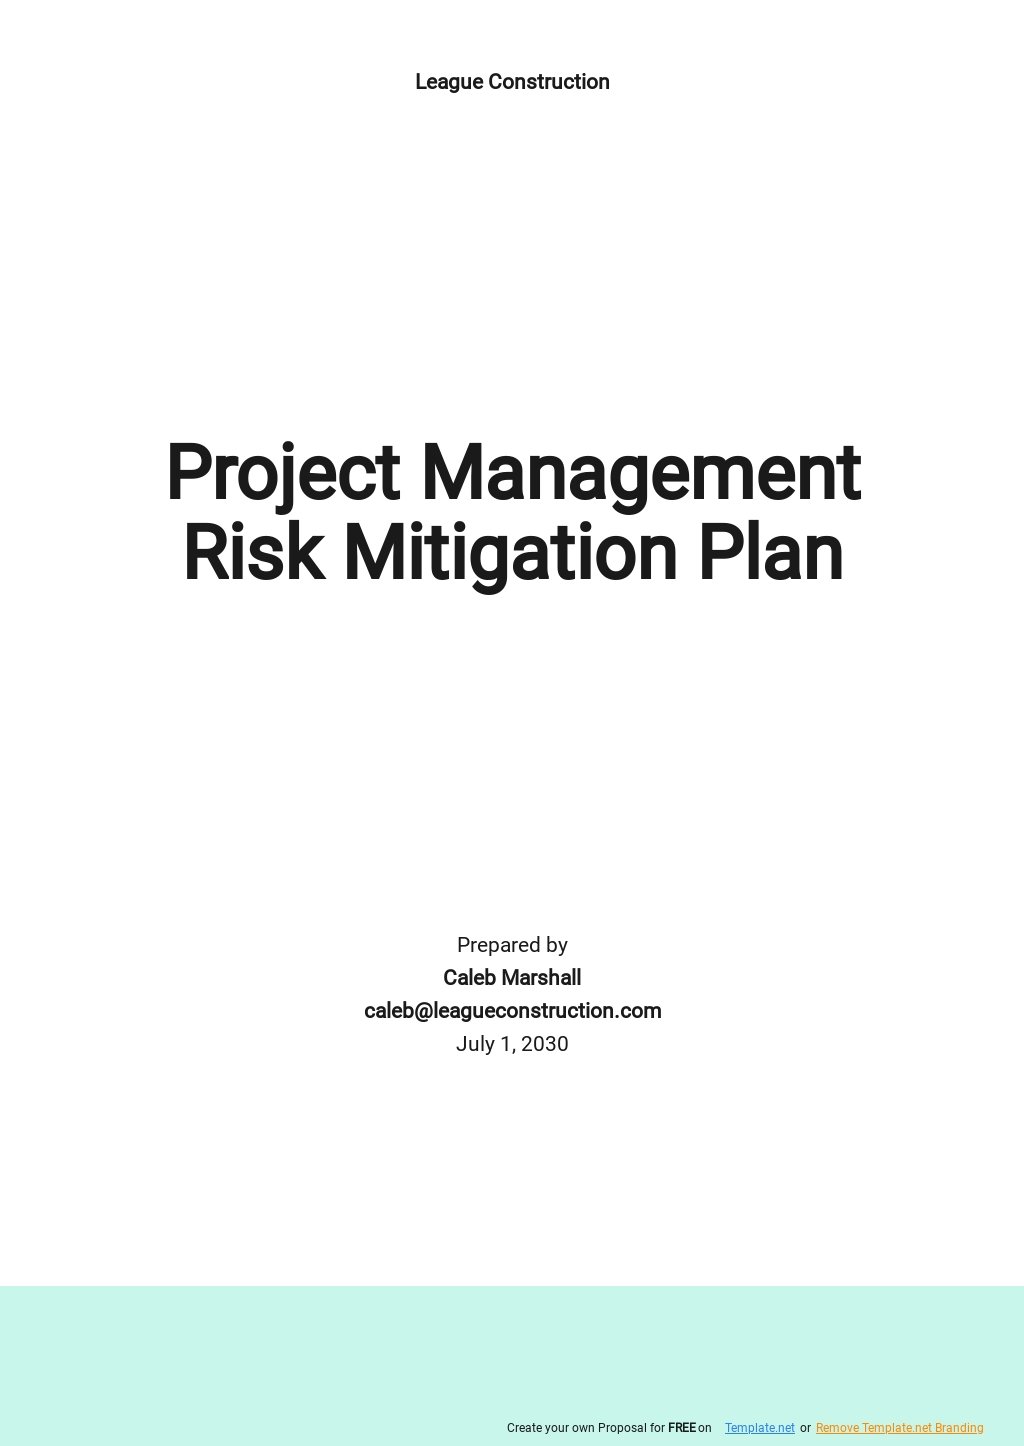 Project Management Risk Mitigation Plan Template.jpe